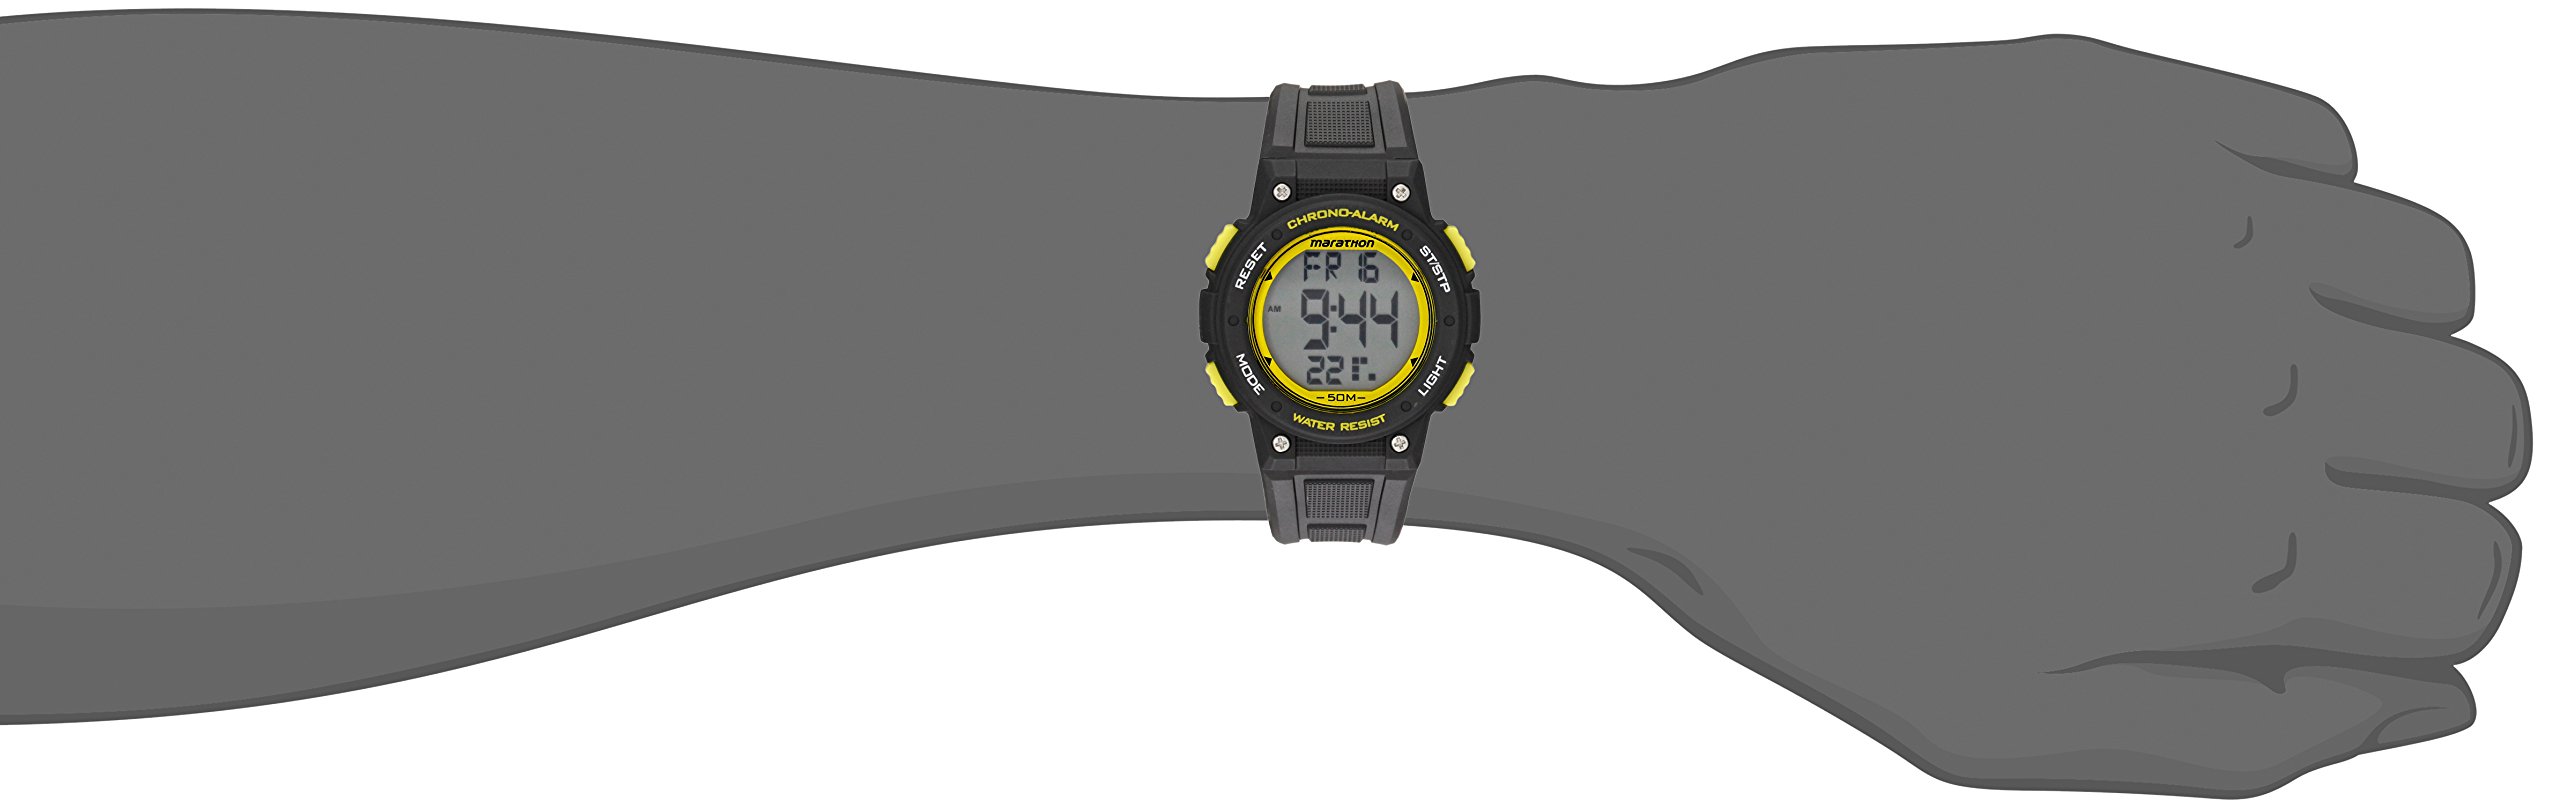 Timex Unisex TW5K84900 Marathon Digital Watch with Black Band